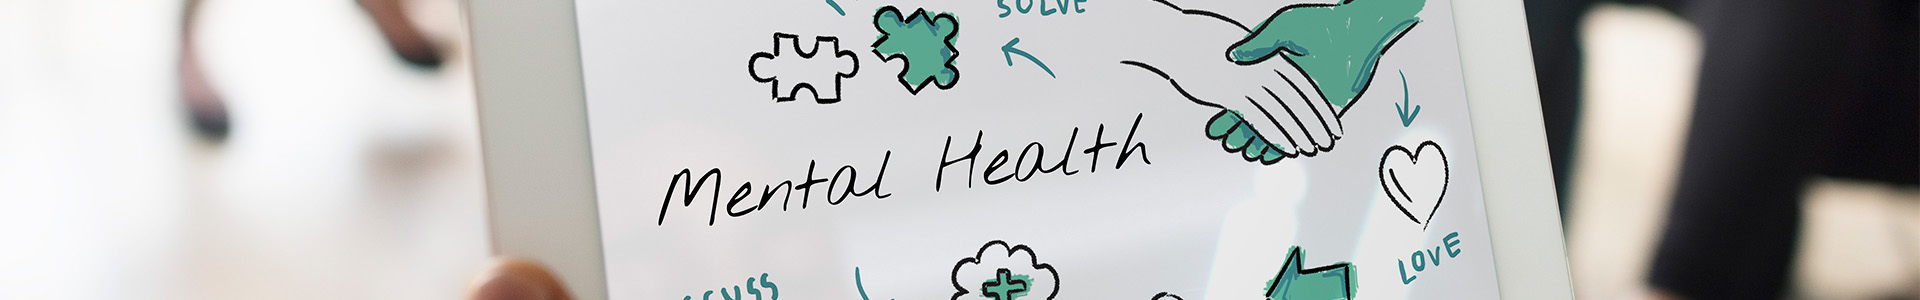 Mental Health Program banner image